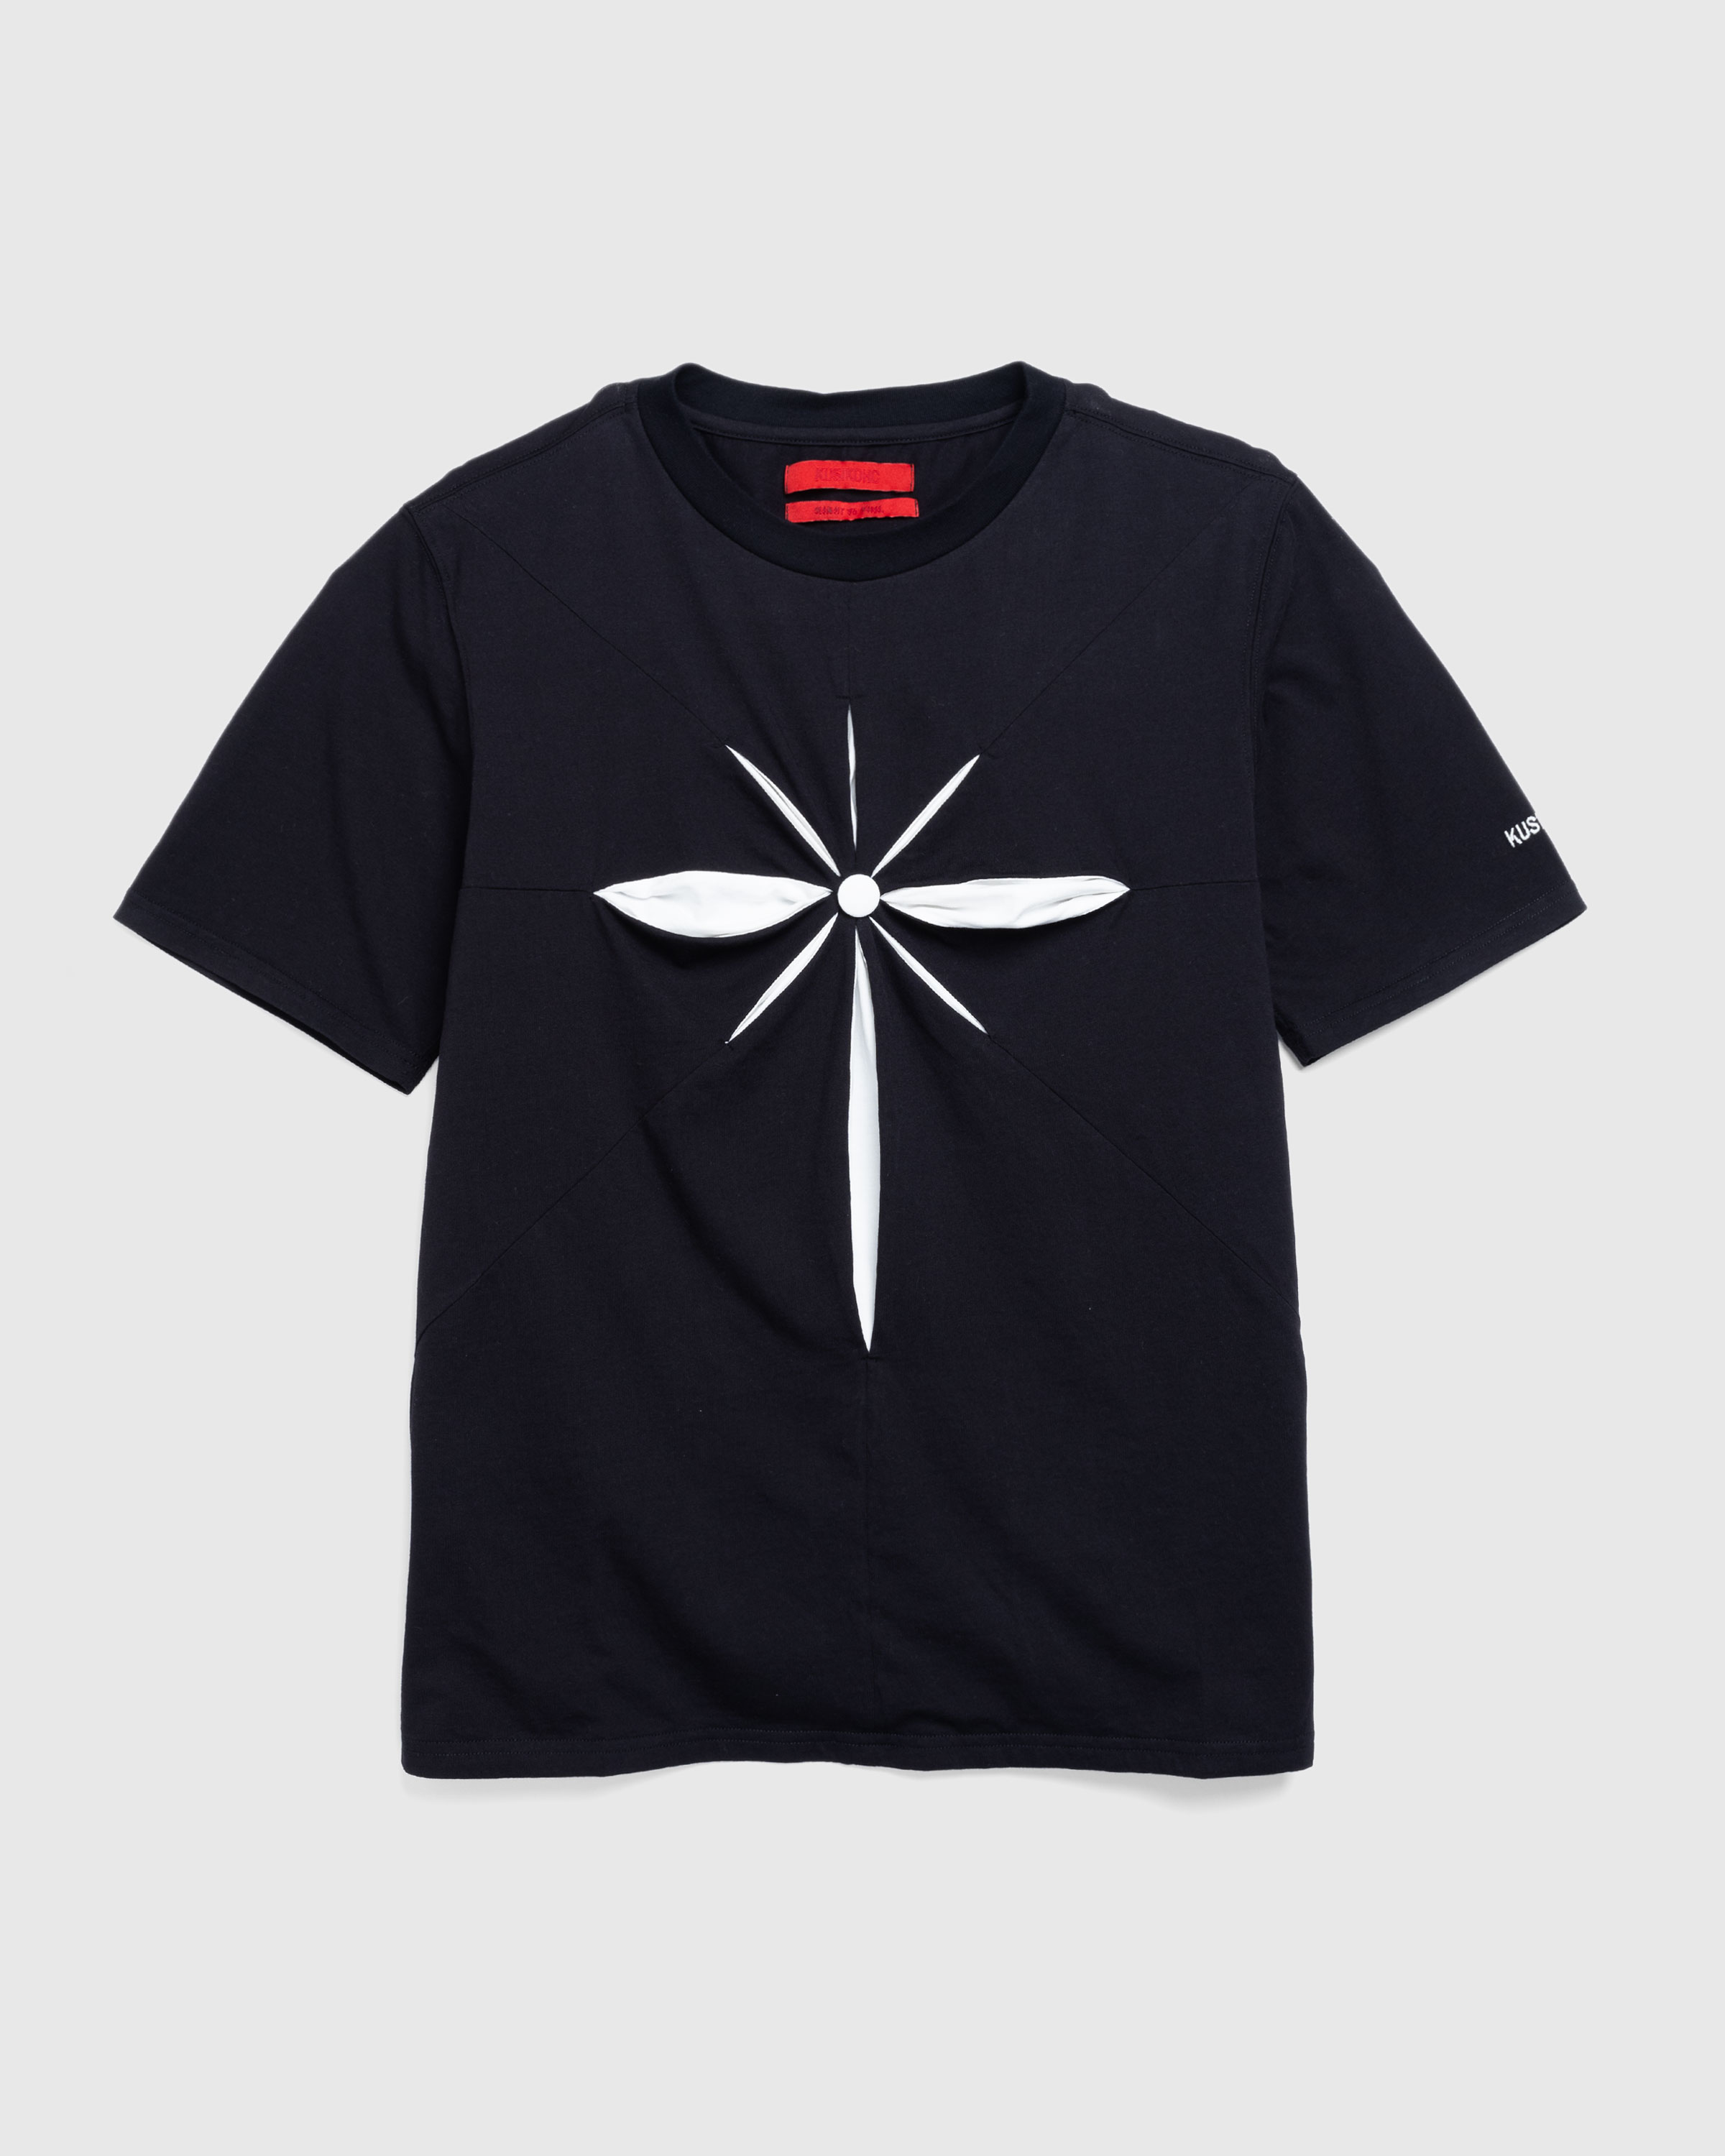 KUSIKOHC – Origami T-Shirt Black/White Alyssum - Tops - Black - Image 1